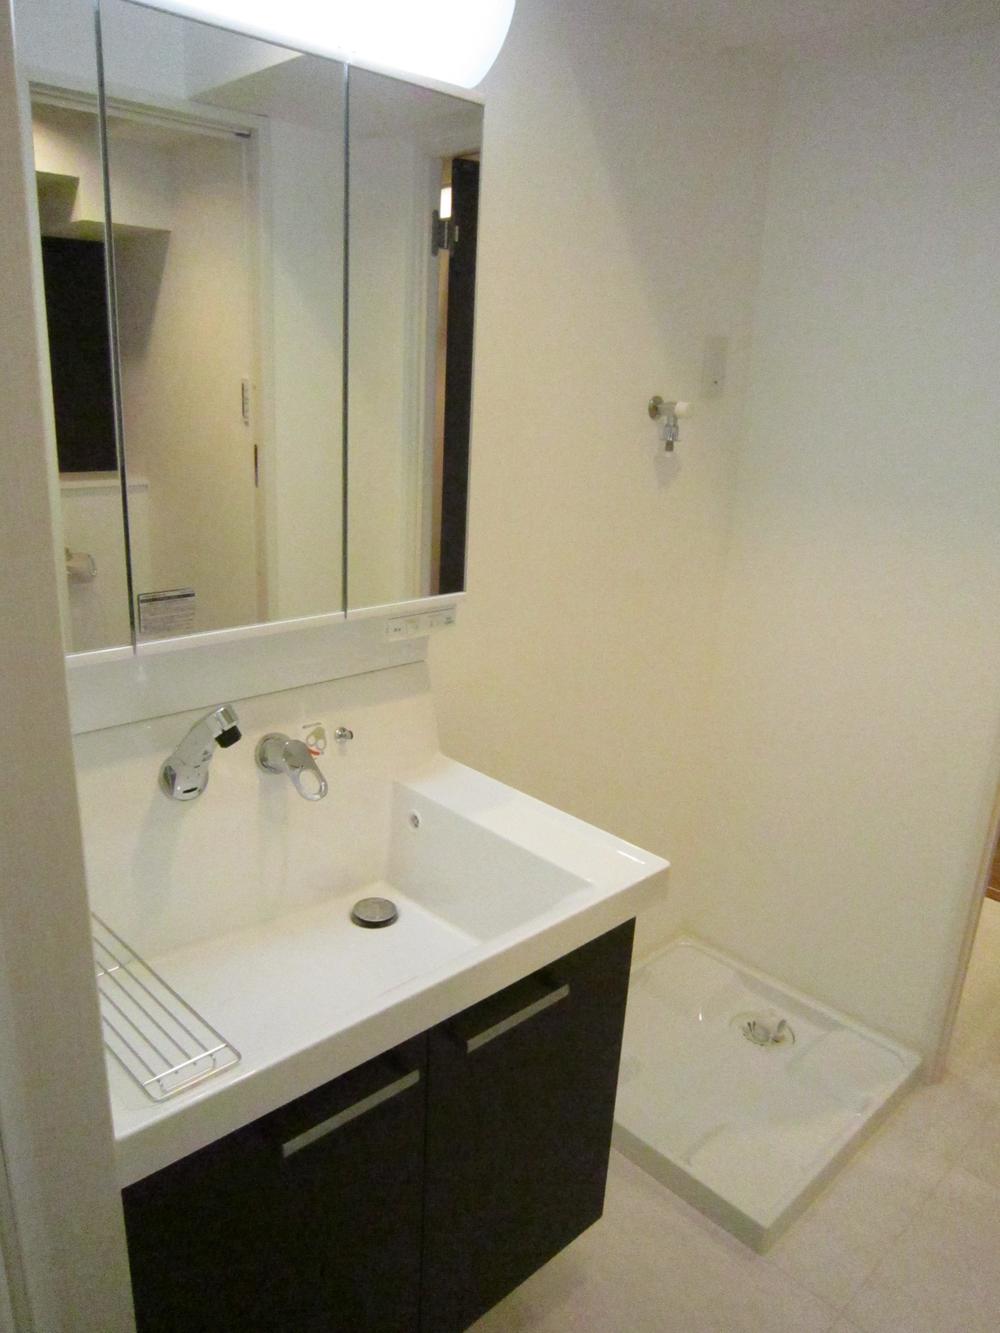 Wash basin, toilet. Washroom of rear storage with three-sided mirror [Interior enforcement example]